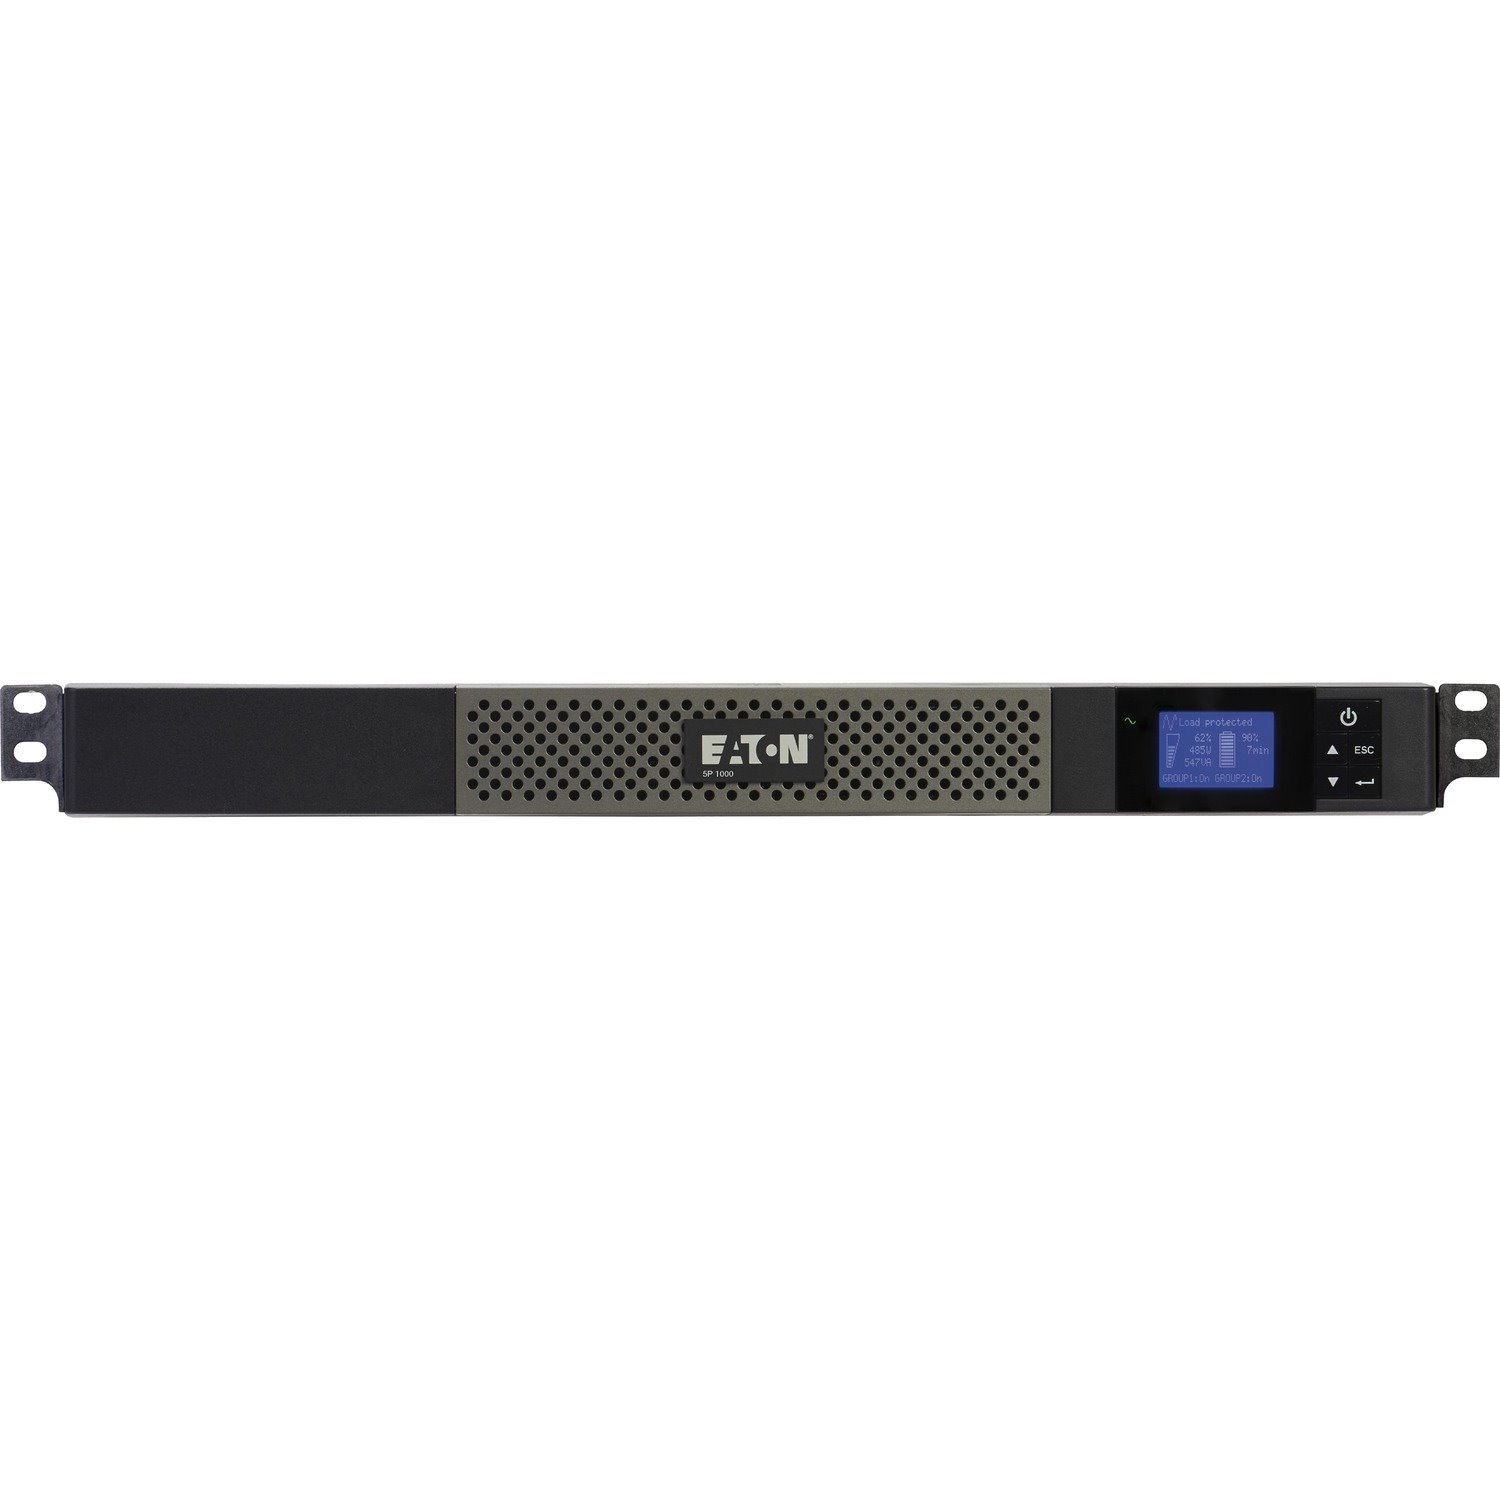 Eaton 5P UPS 1000VA 770W 120V Line-Interactive UPS, 5-15P, 5x 5-15R Outlets, True Sine Wave, Cybersecure Network Card Option, 1U